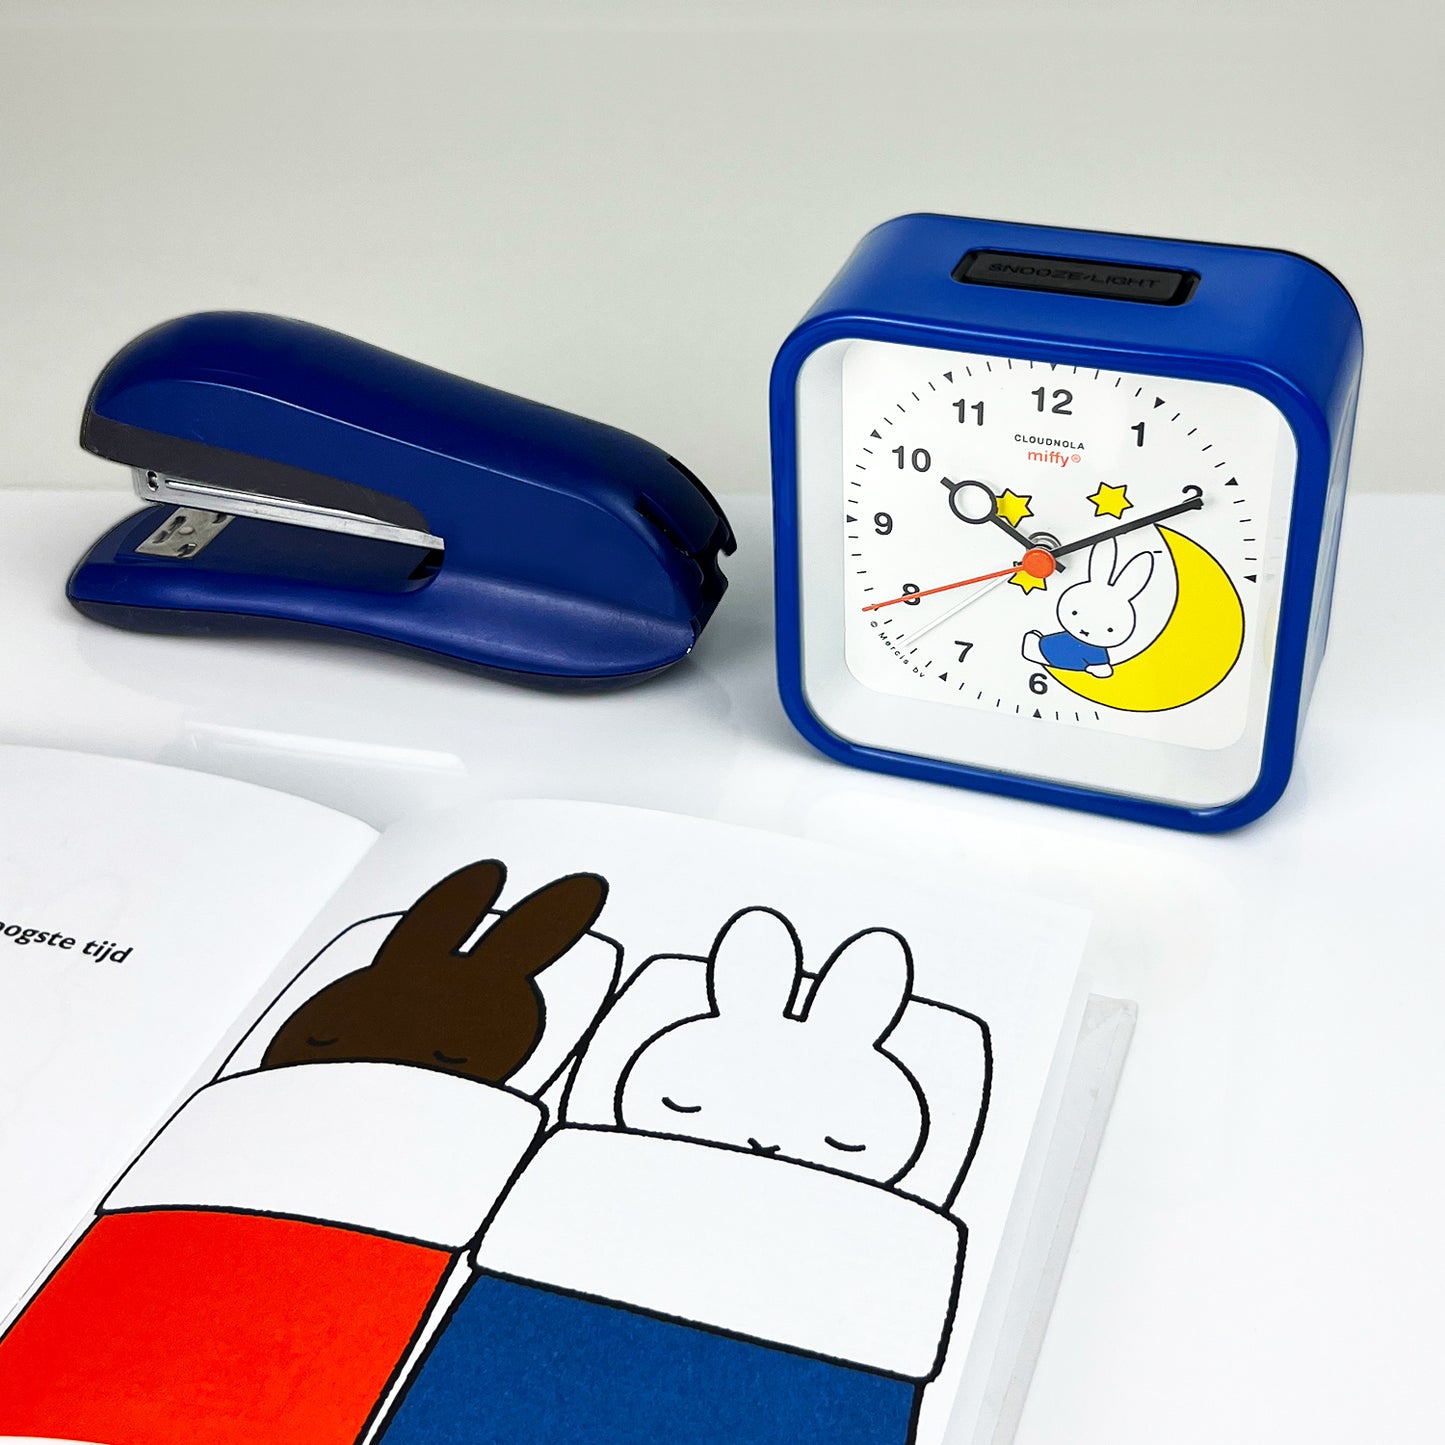 Miffy Blue Alarm Clock - Nijntje Collaboration - Analog - LED Illumination - Snooze Feature